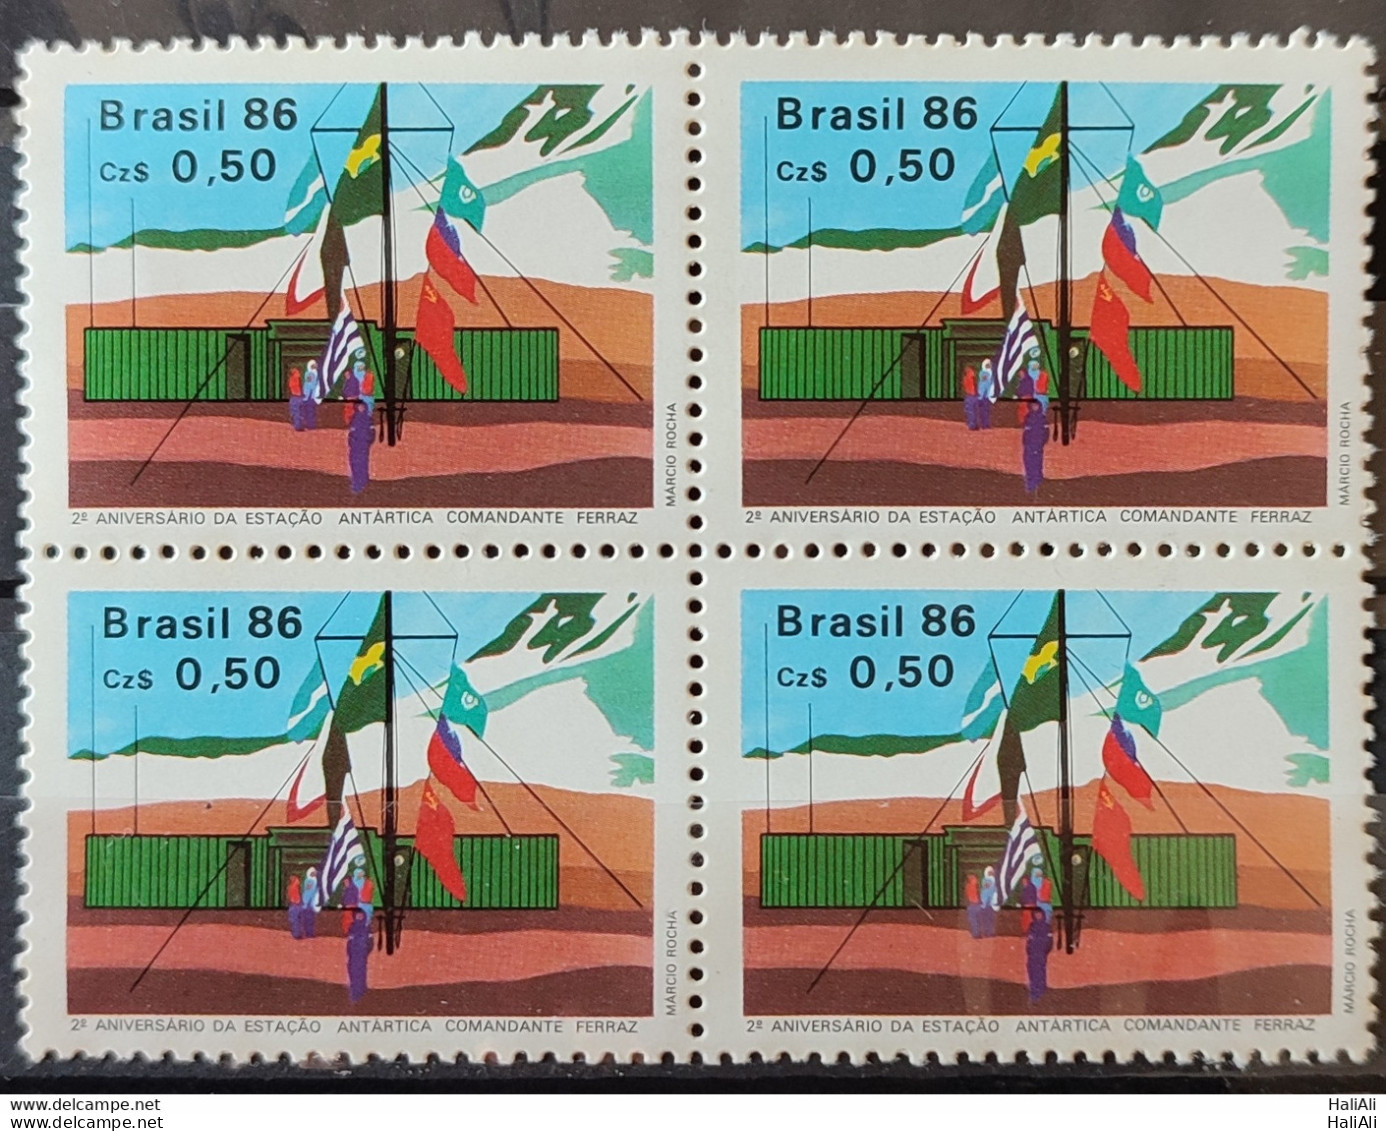 C 1508 Brazil Stamp Antarctic Station Commander Ferraz Flag 1986 Block Of 4 2.jpg - Nuovi